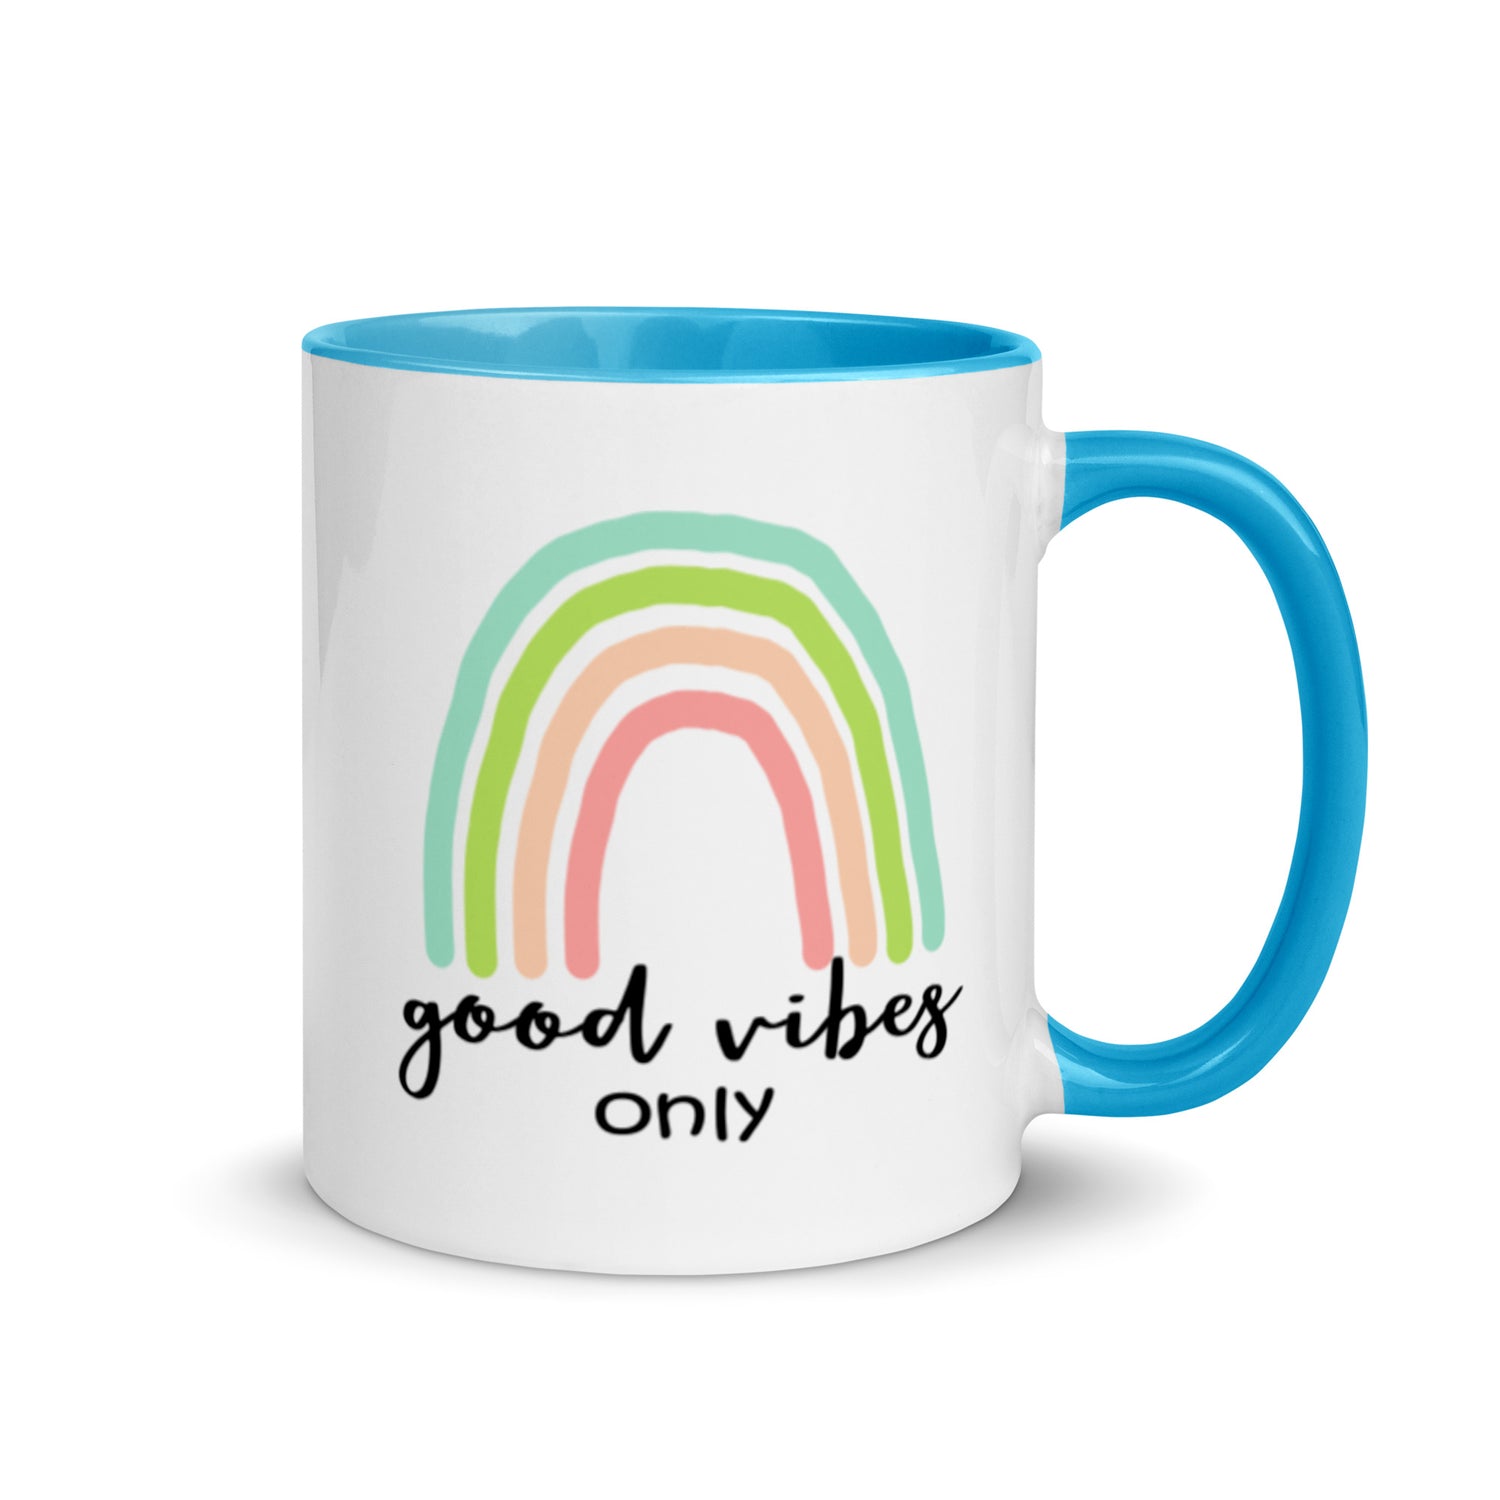 good vibes only rainbow mug - blue interior